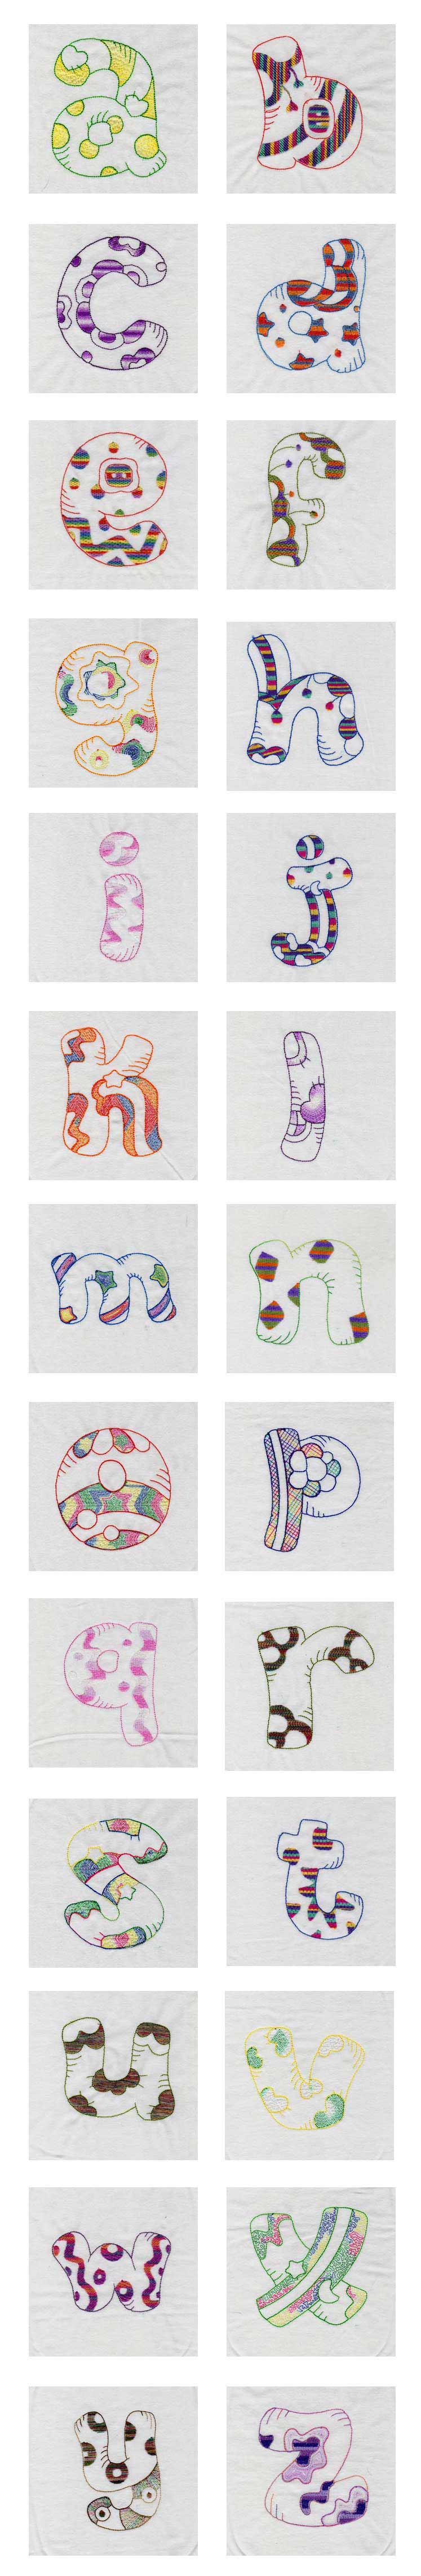 Kids Fun Alpha Embroidery Machine Design Details